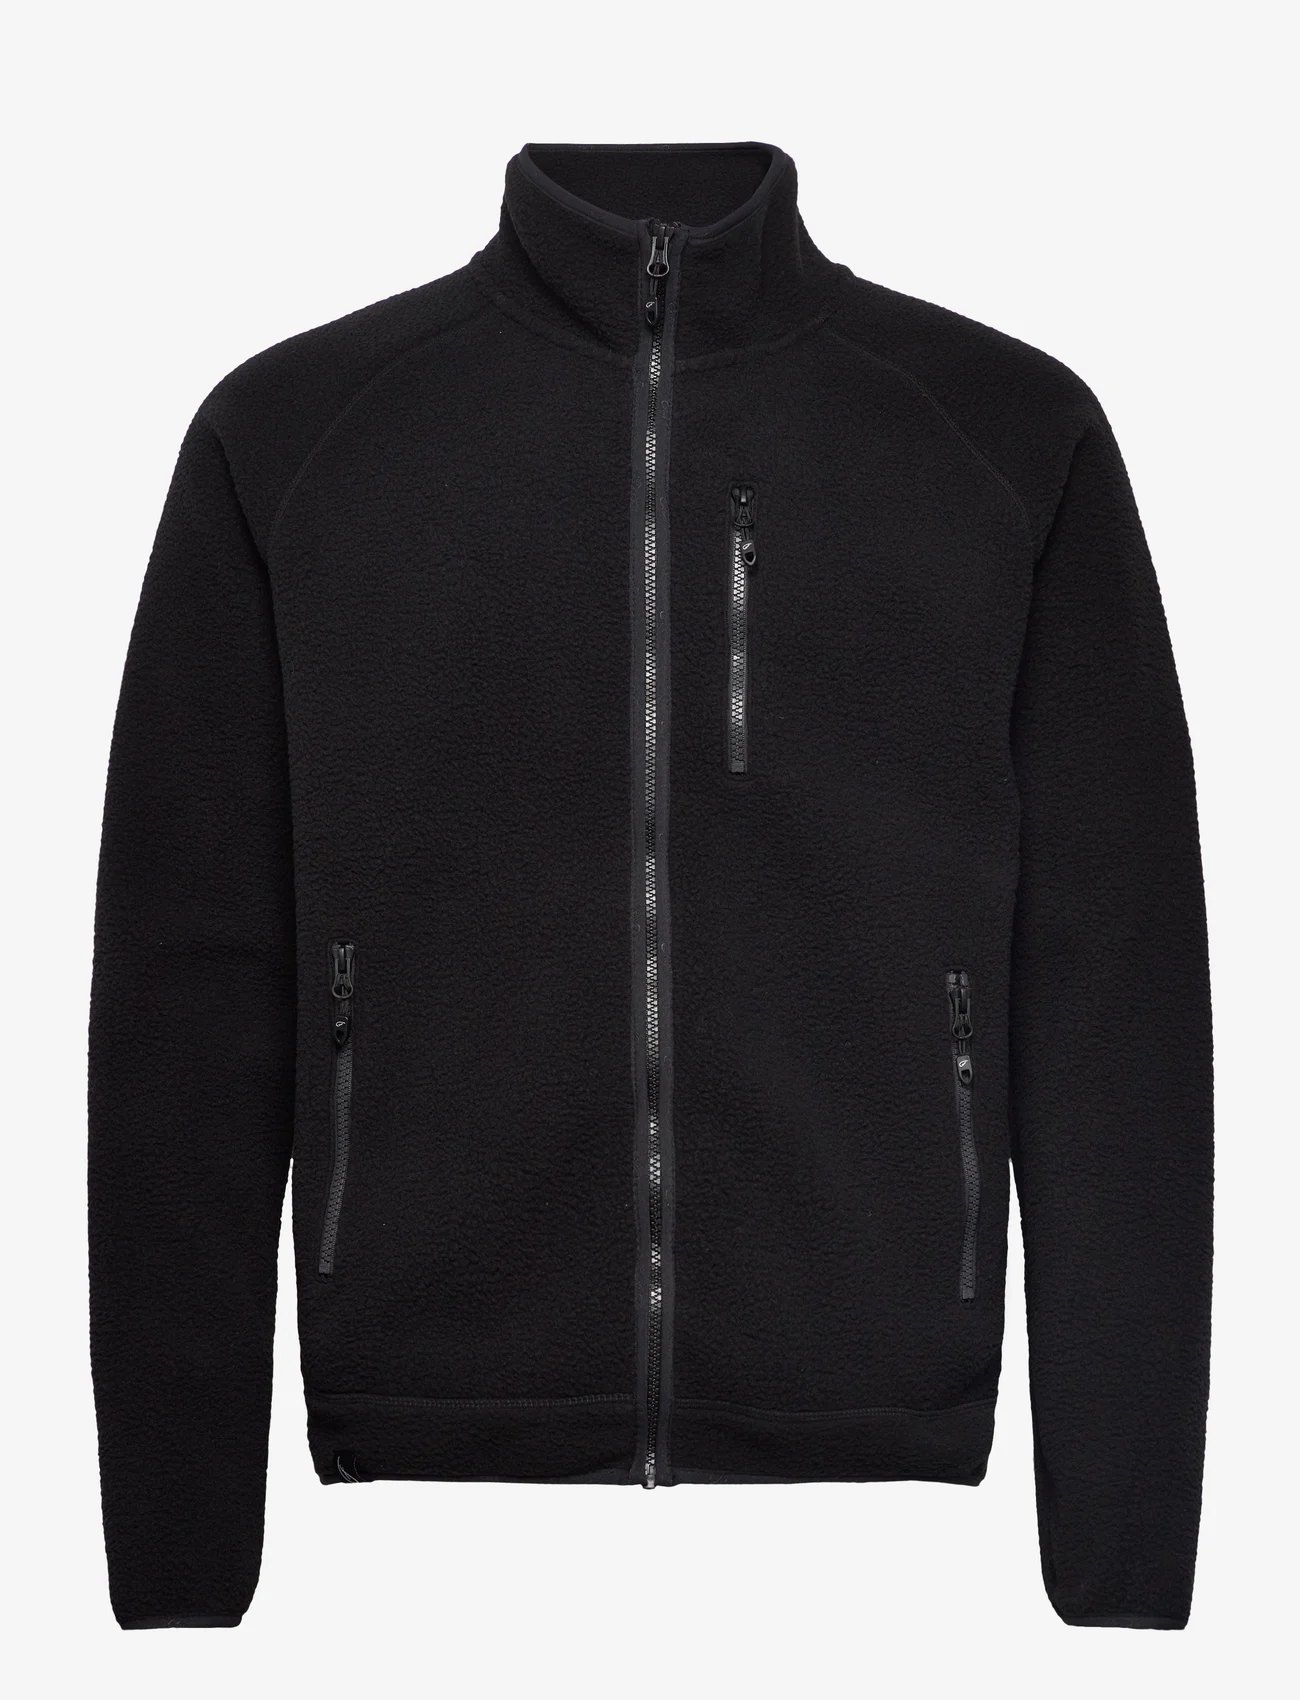 Five Seasons - GALE JKT M - mid layer jackets - black - 0